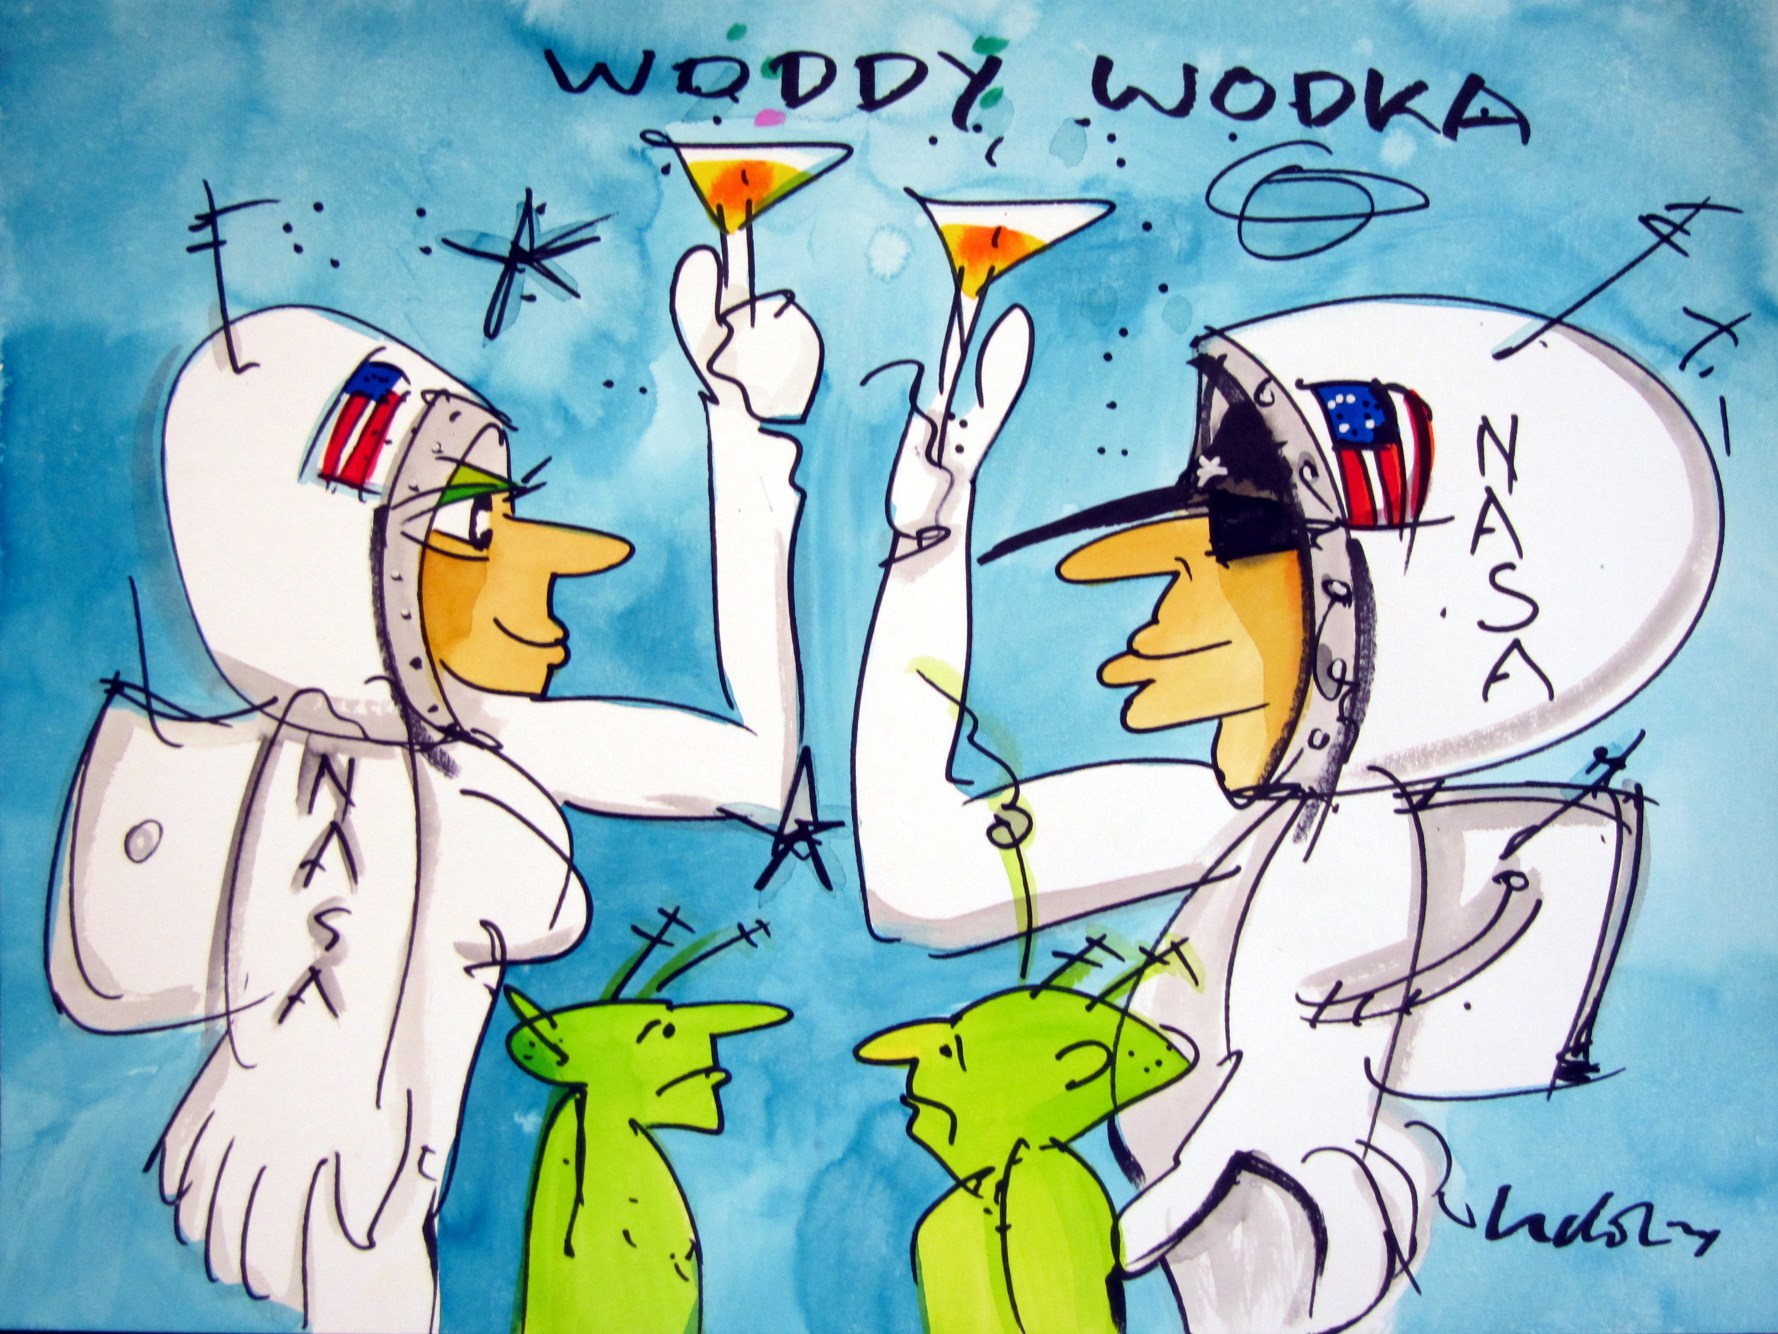 Woddy Wodka, groß 2012